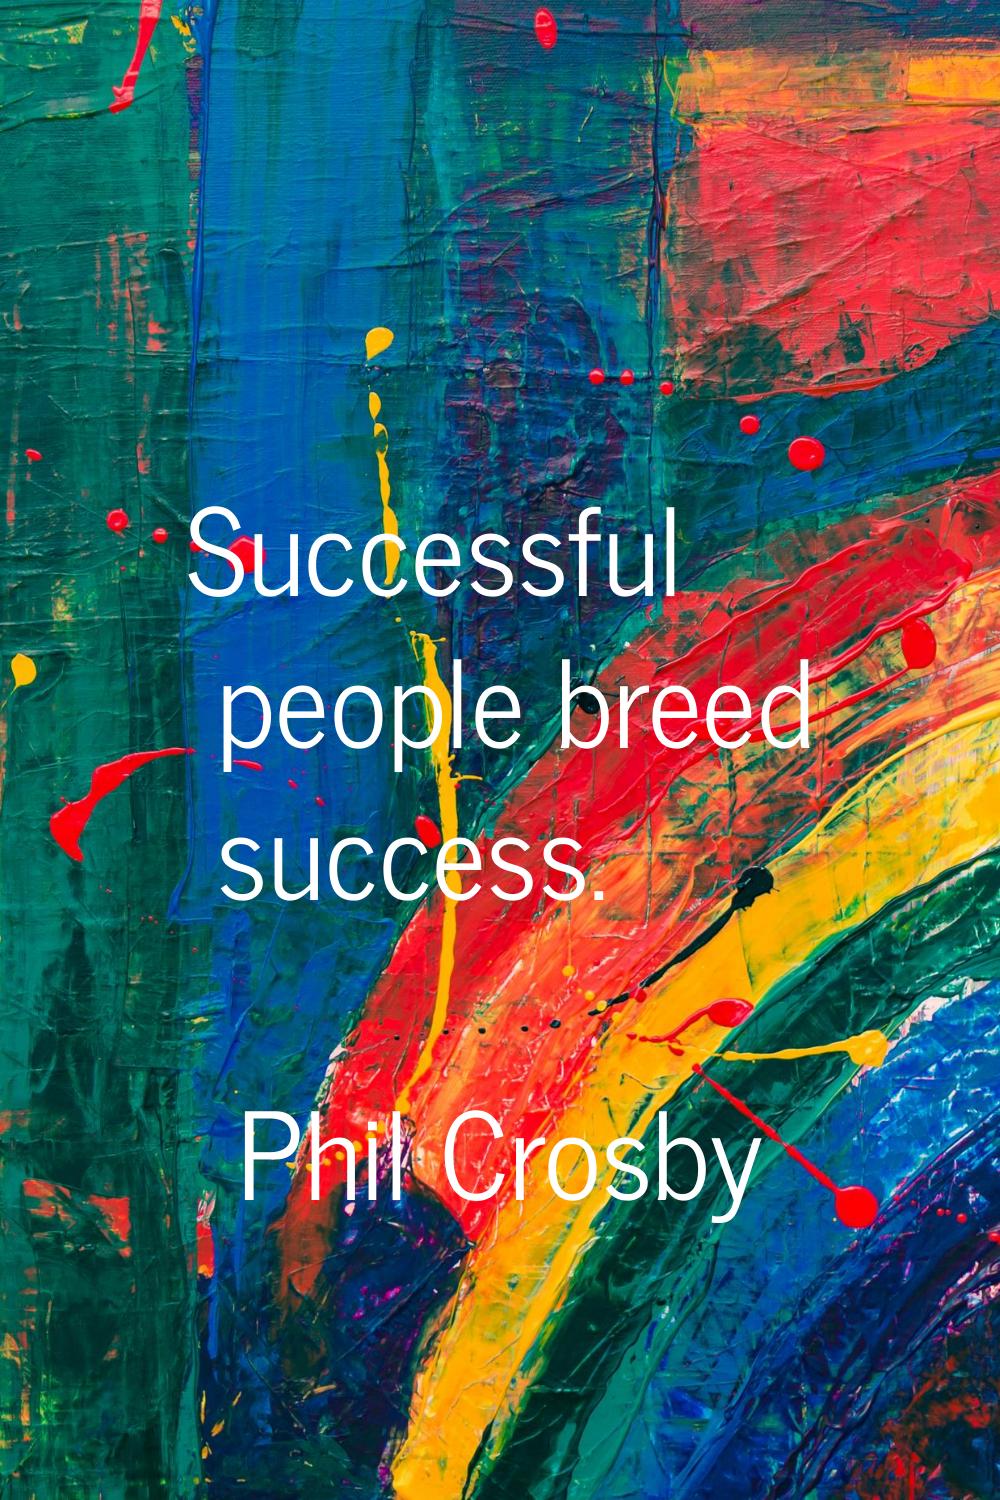 Successful people breed success.